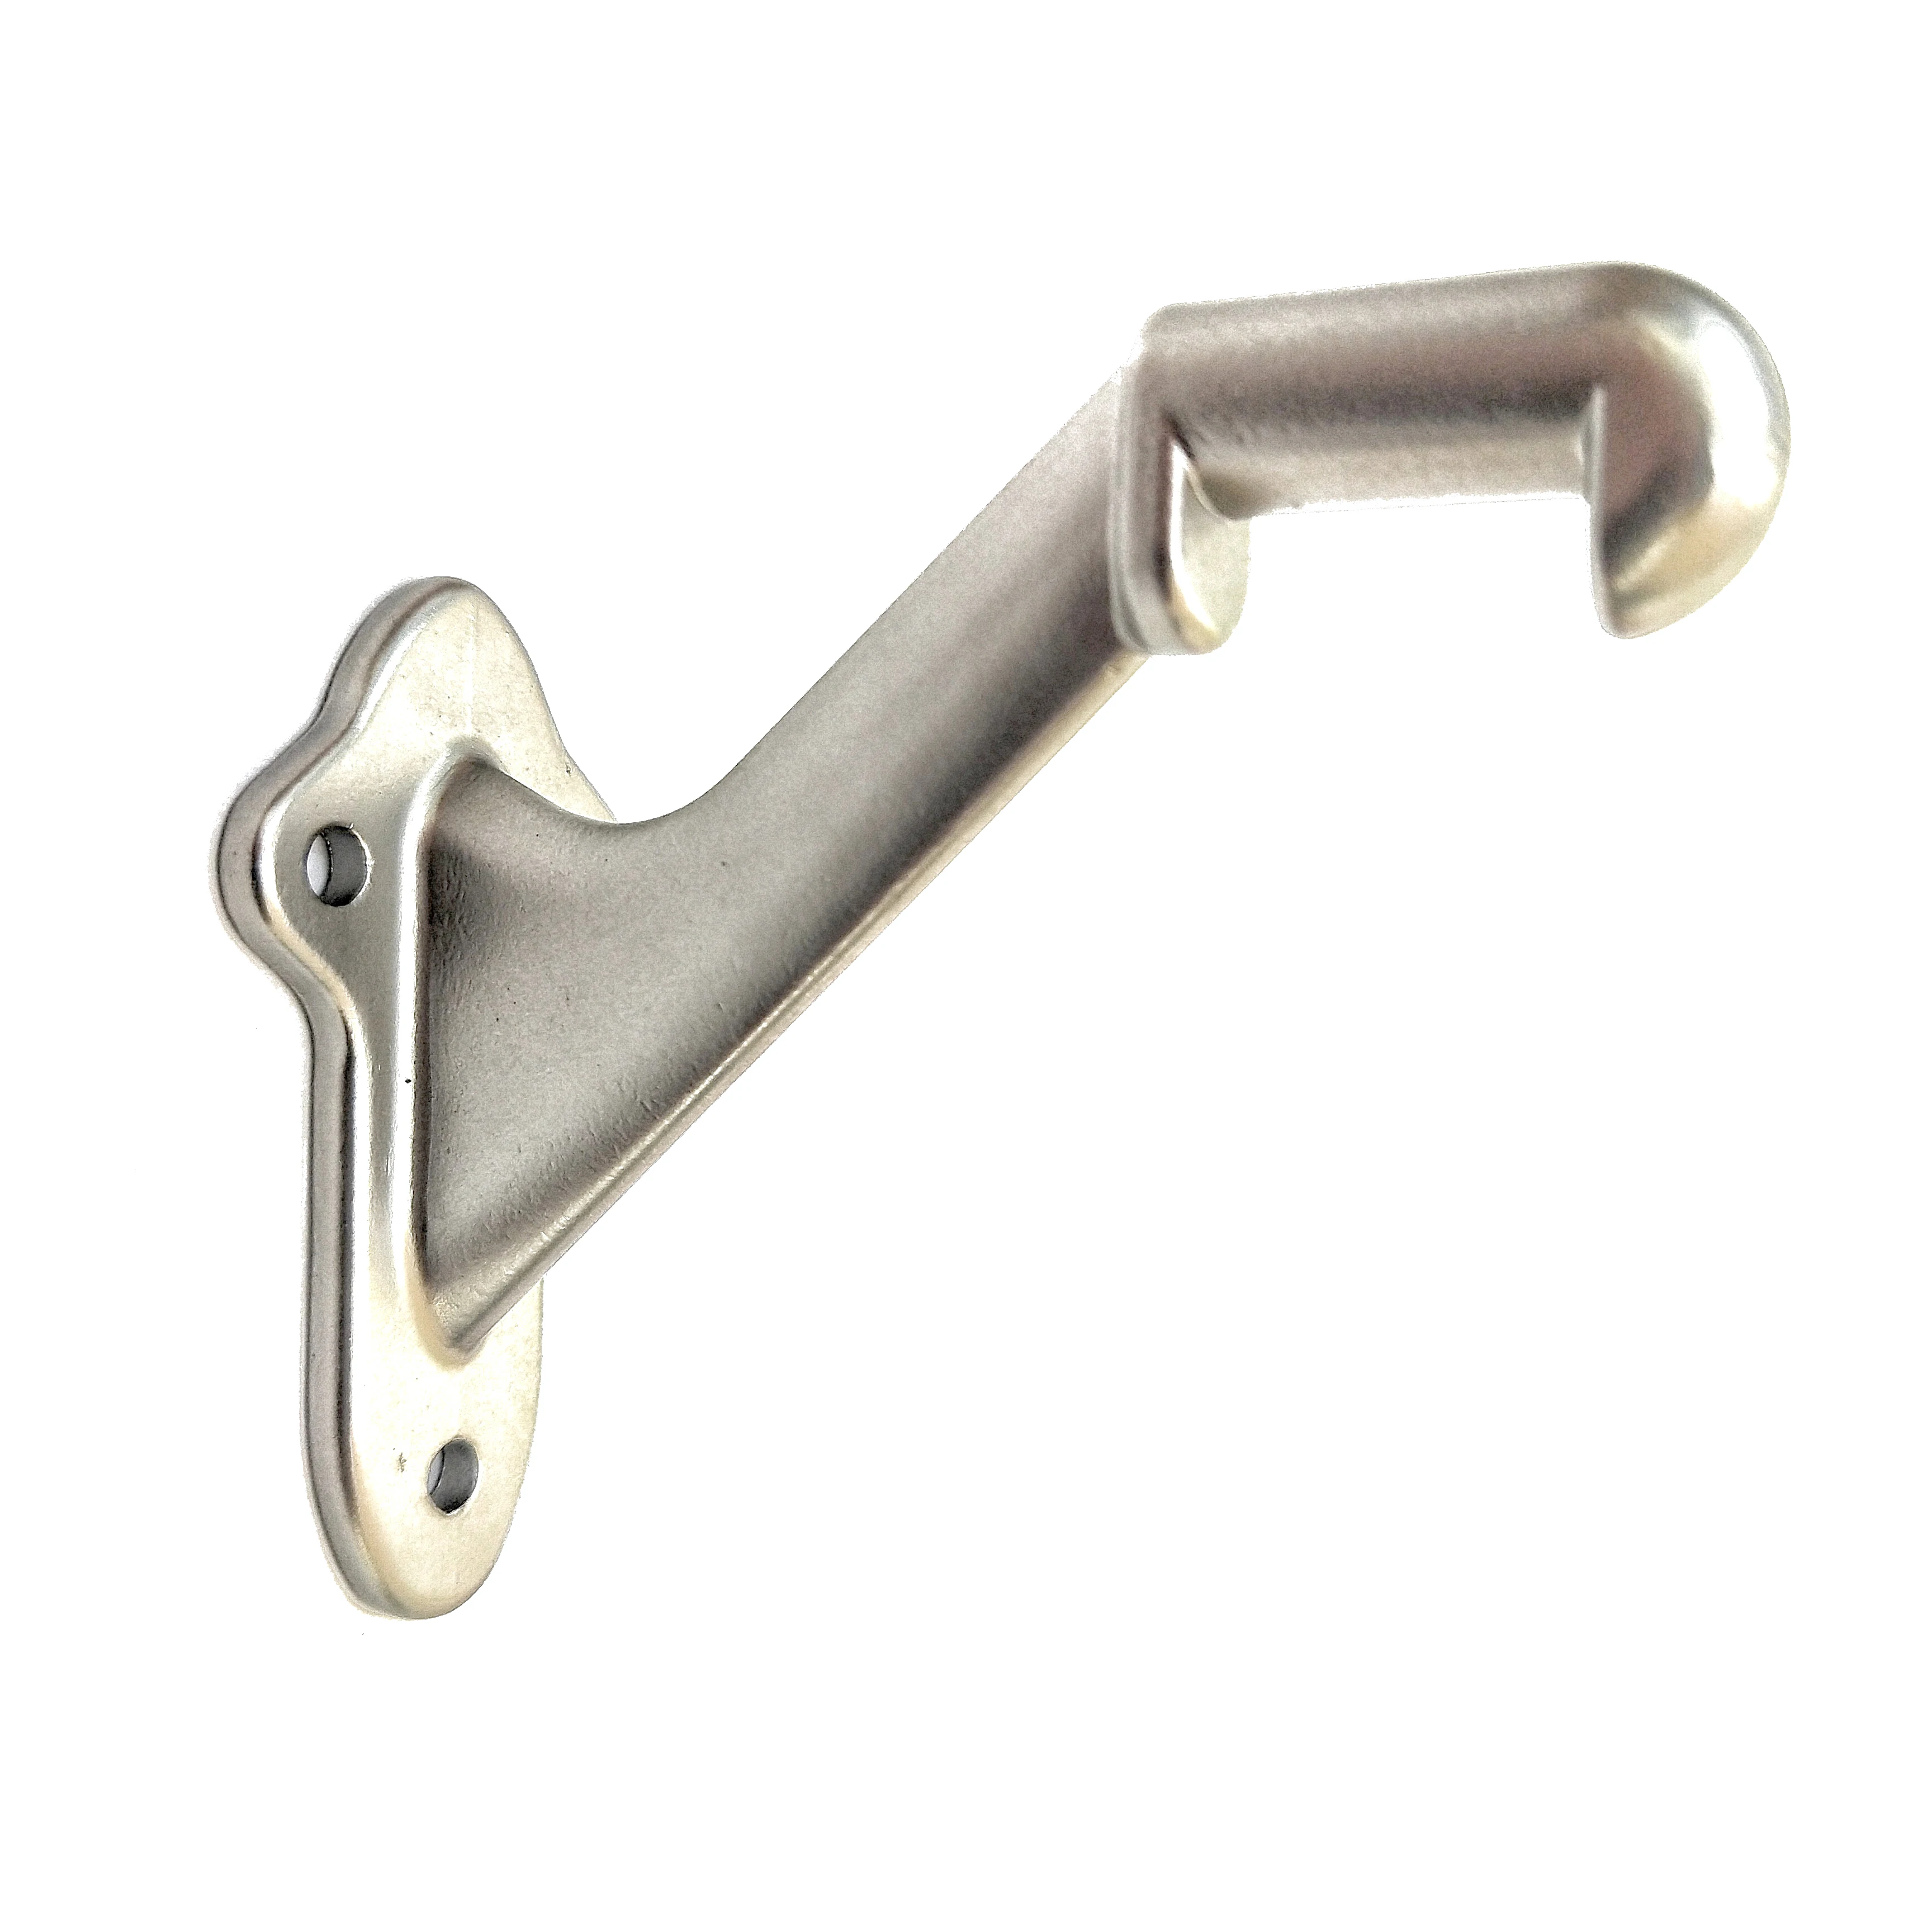 Utility Hardware Zinc Alloy Metal Exterior Handrail Bracket in Satin Nickel